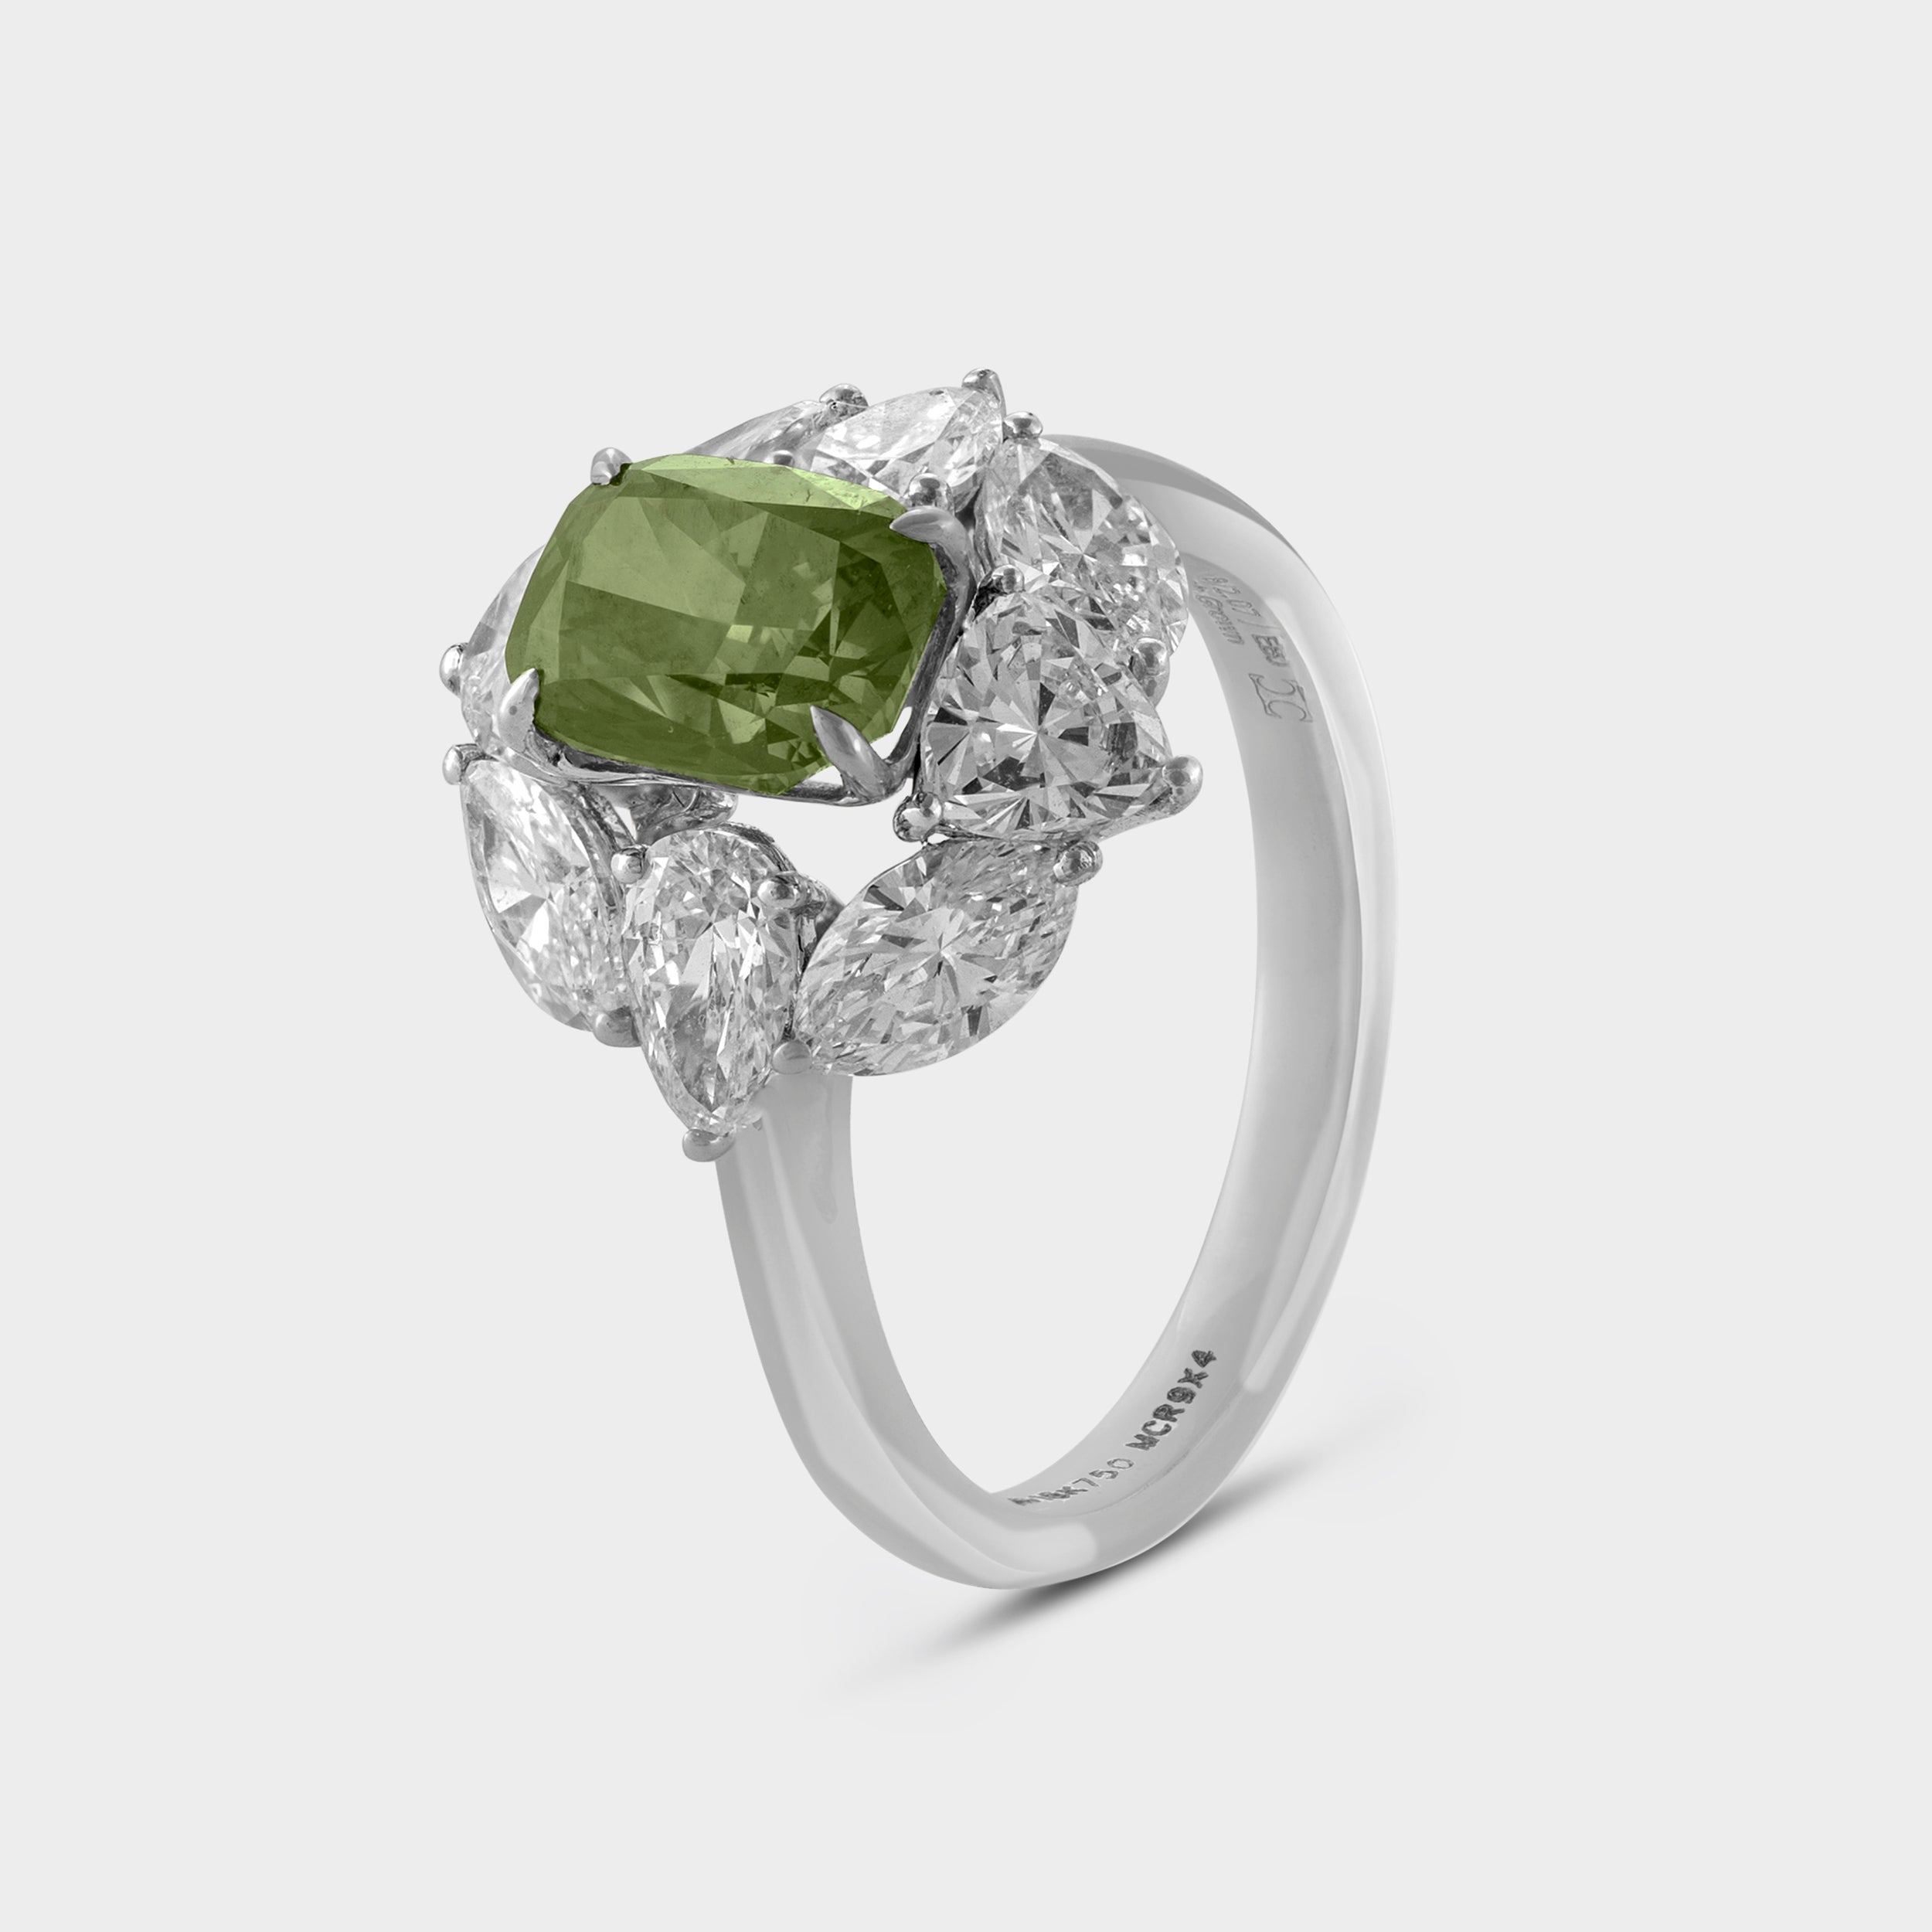 Verdant Vista: Cushion-Cut Green Diamond Ring with White Diamond Accents | SKU:0019463278